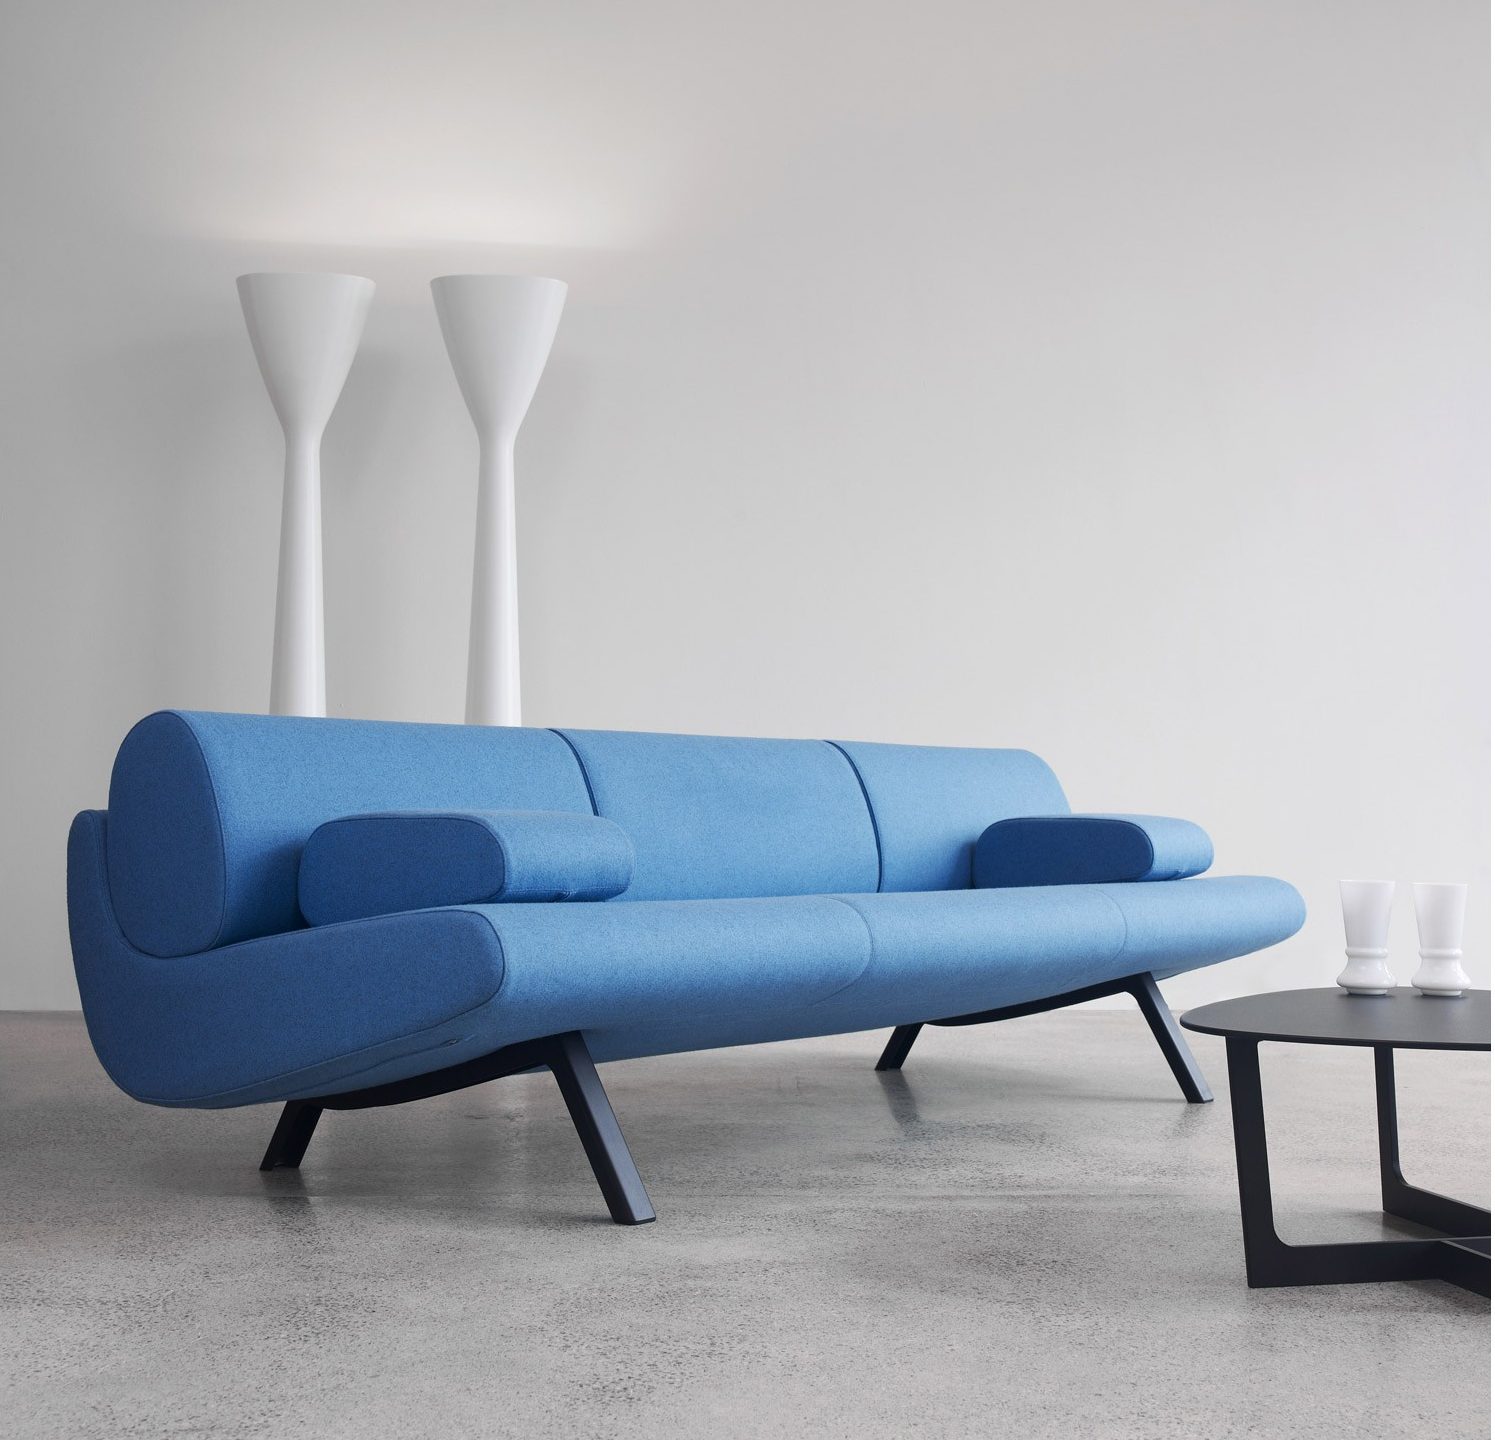 Why Scandinavian Design Is Having A Real Fashion Moment - EJ 180 Duplo Sofa By Erik Jorgensen - Image From Scandium